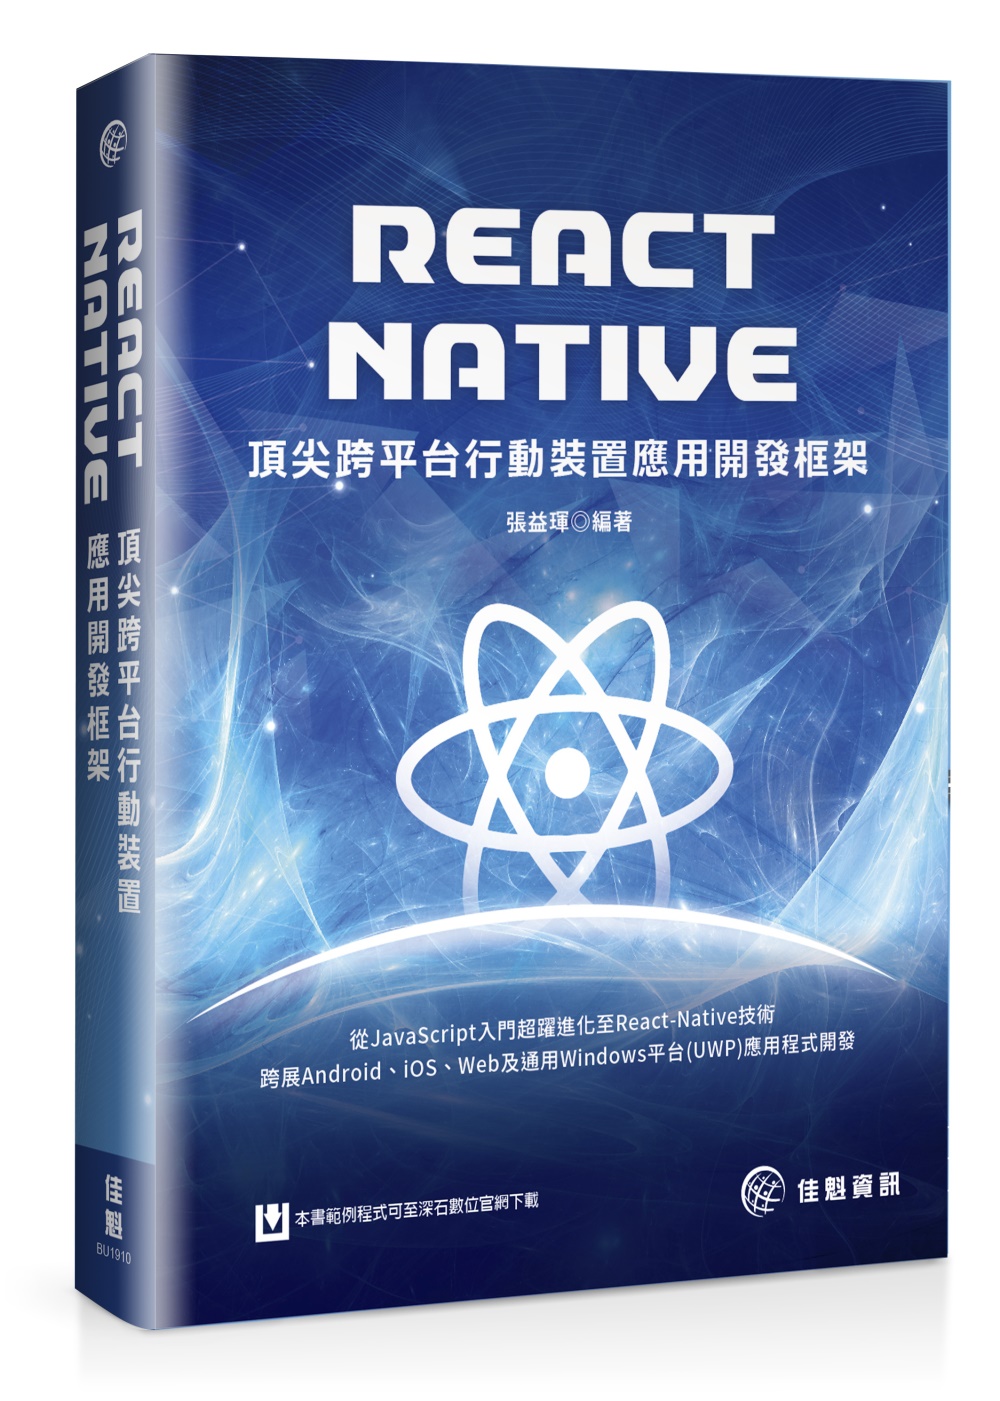 React Native 頂尖跨平台行動裝置應用開發框架